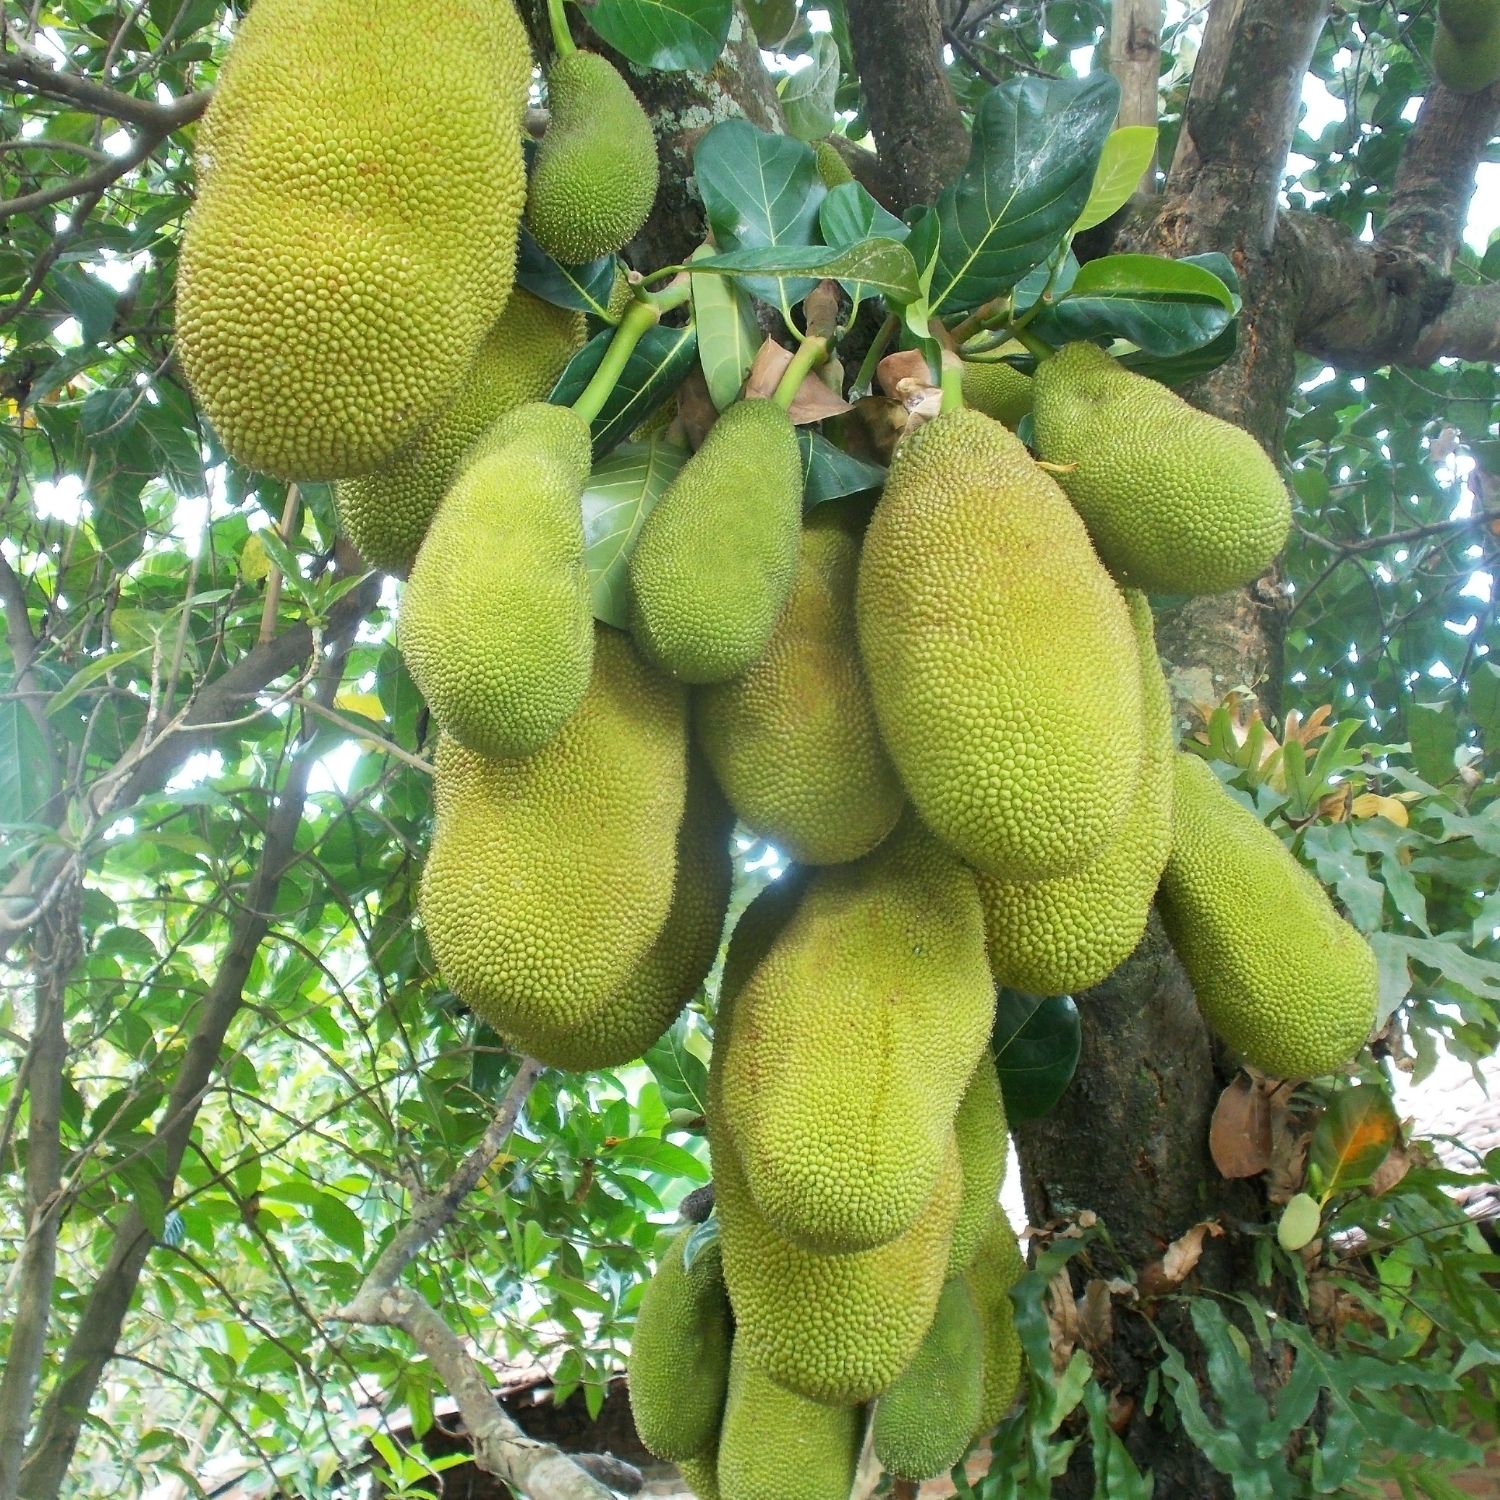 jackfruit tree with large cluster of jackfruit